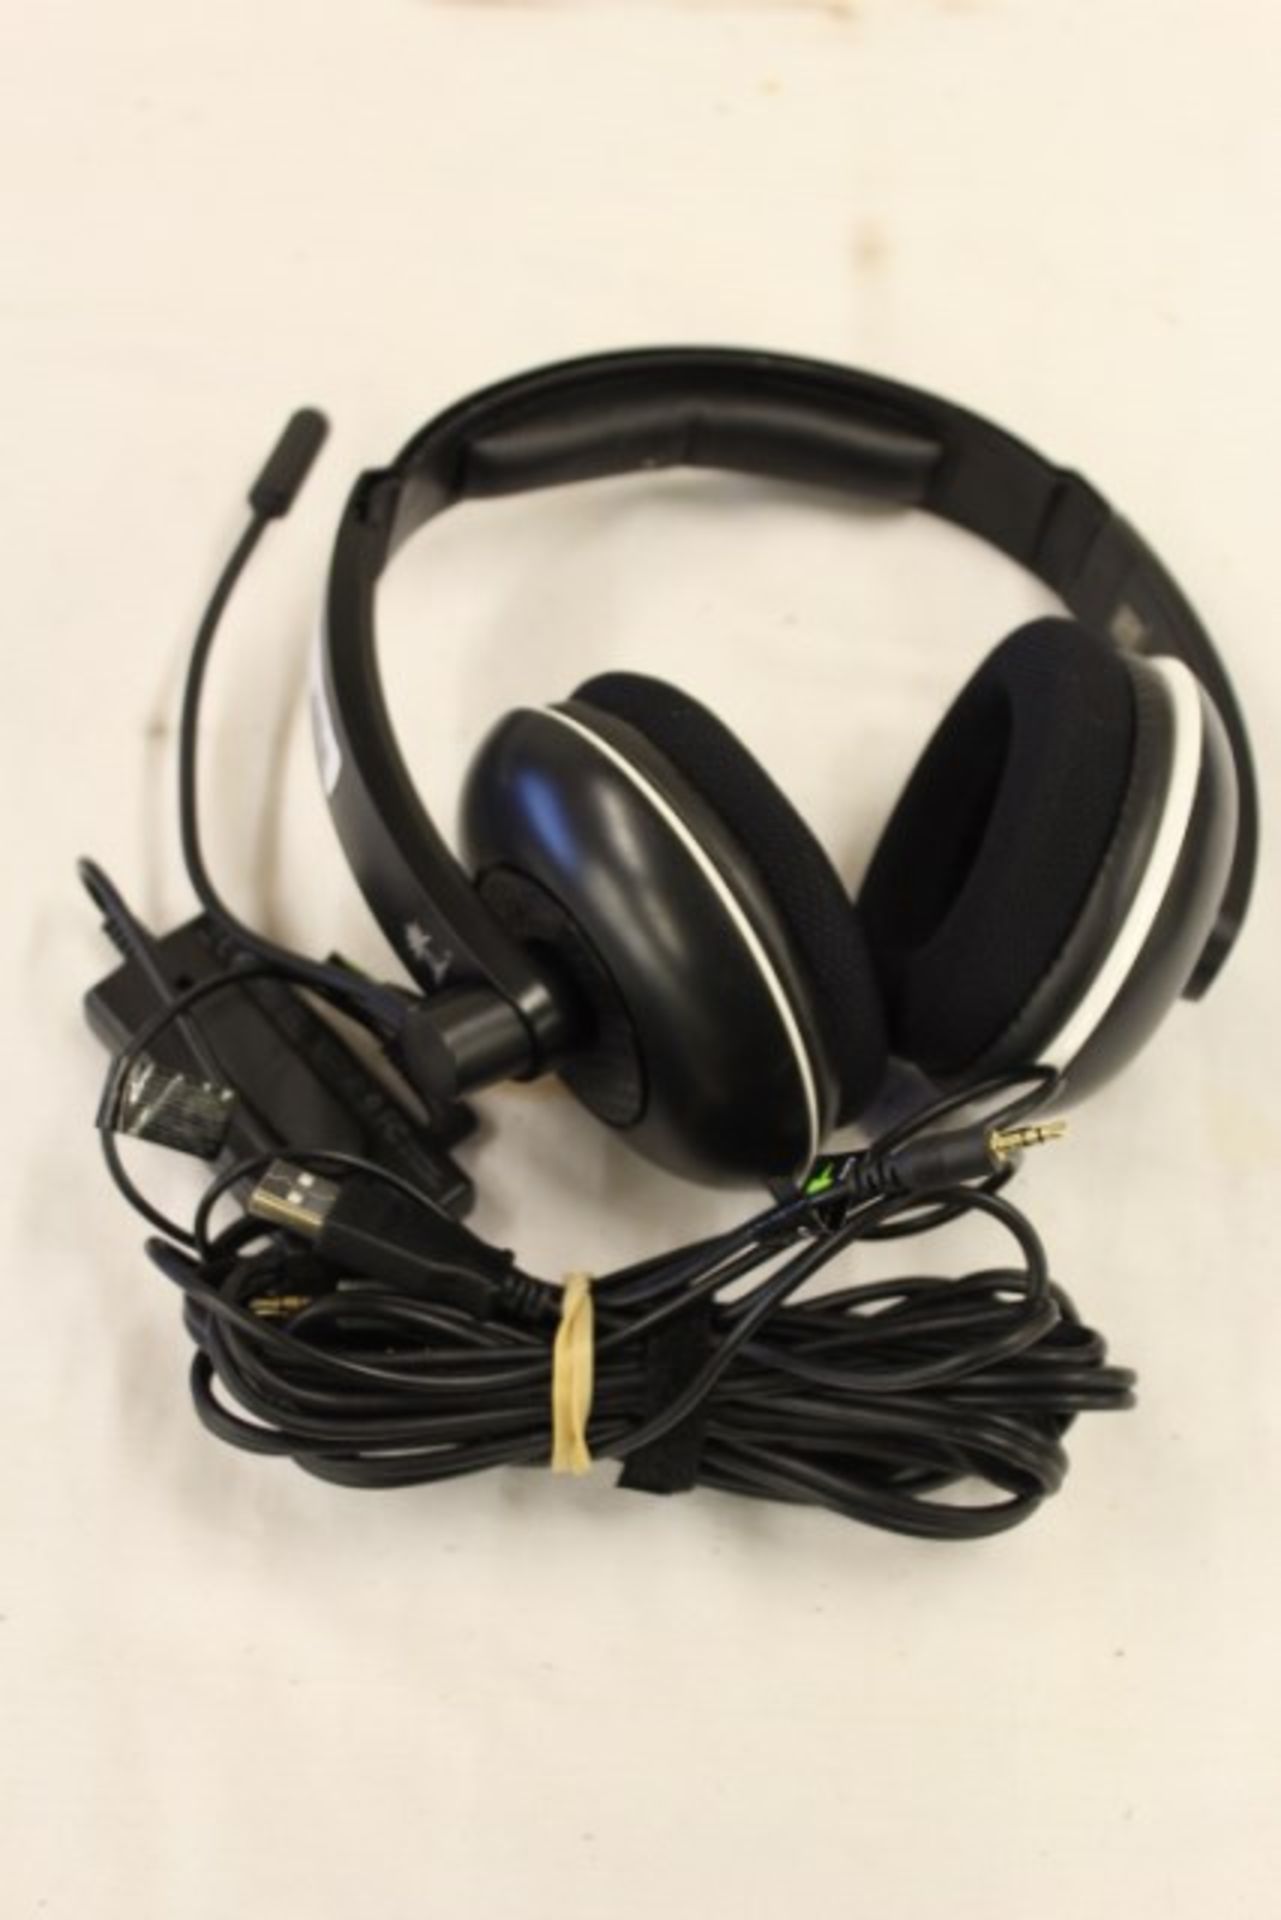 Grade U EarForce Turtle Beach PX11 Headphones With Built In Microphone